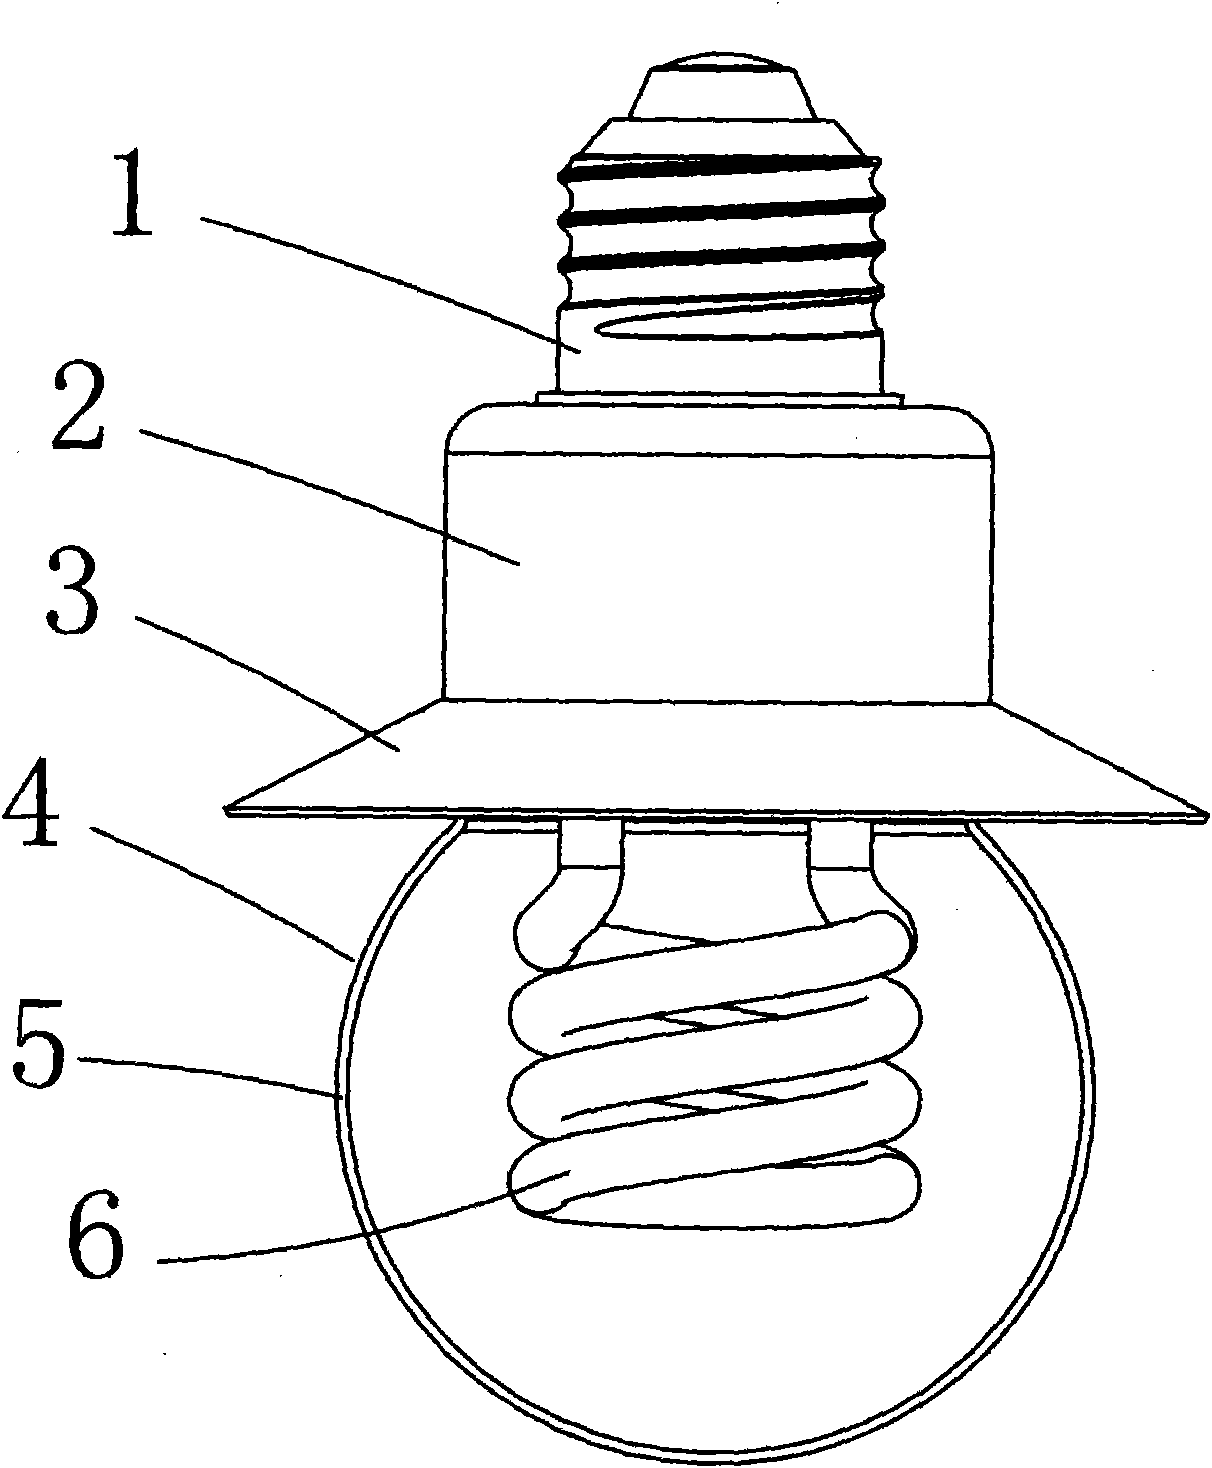 High-efficiency energy-saving bulb